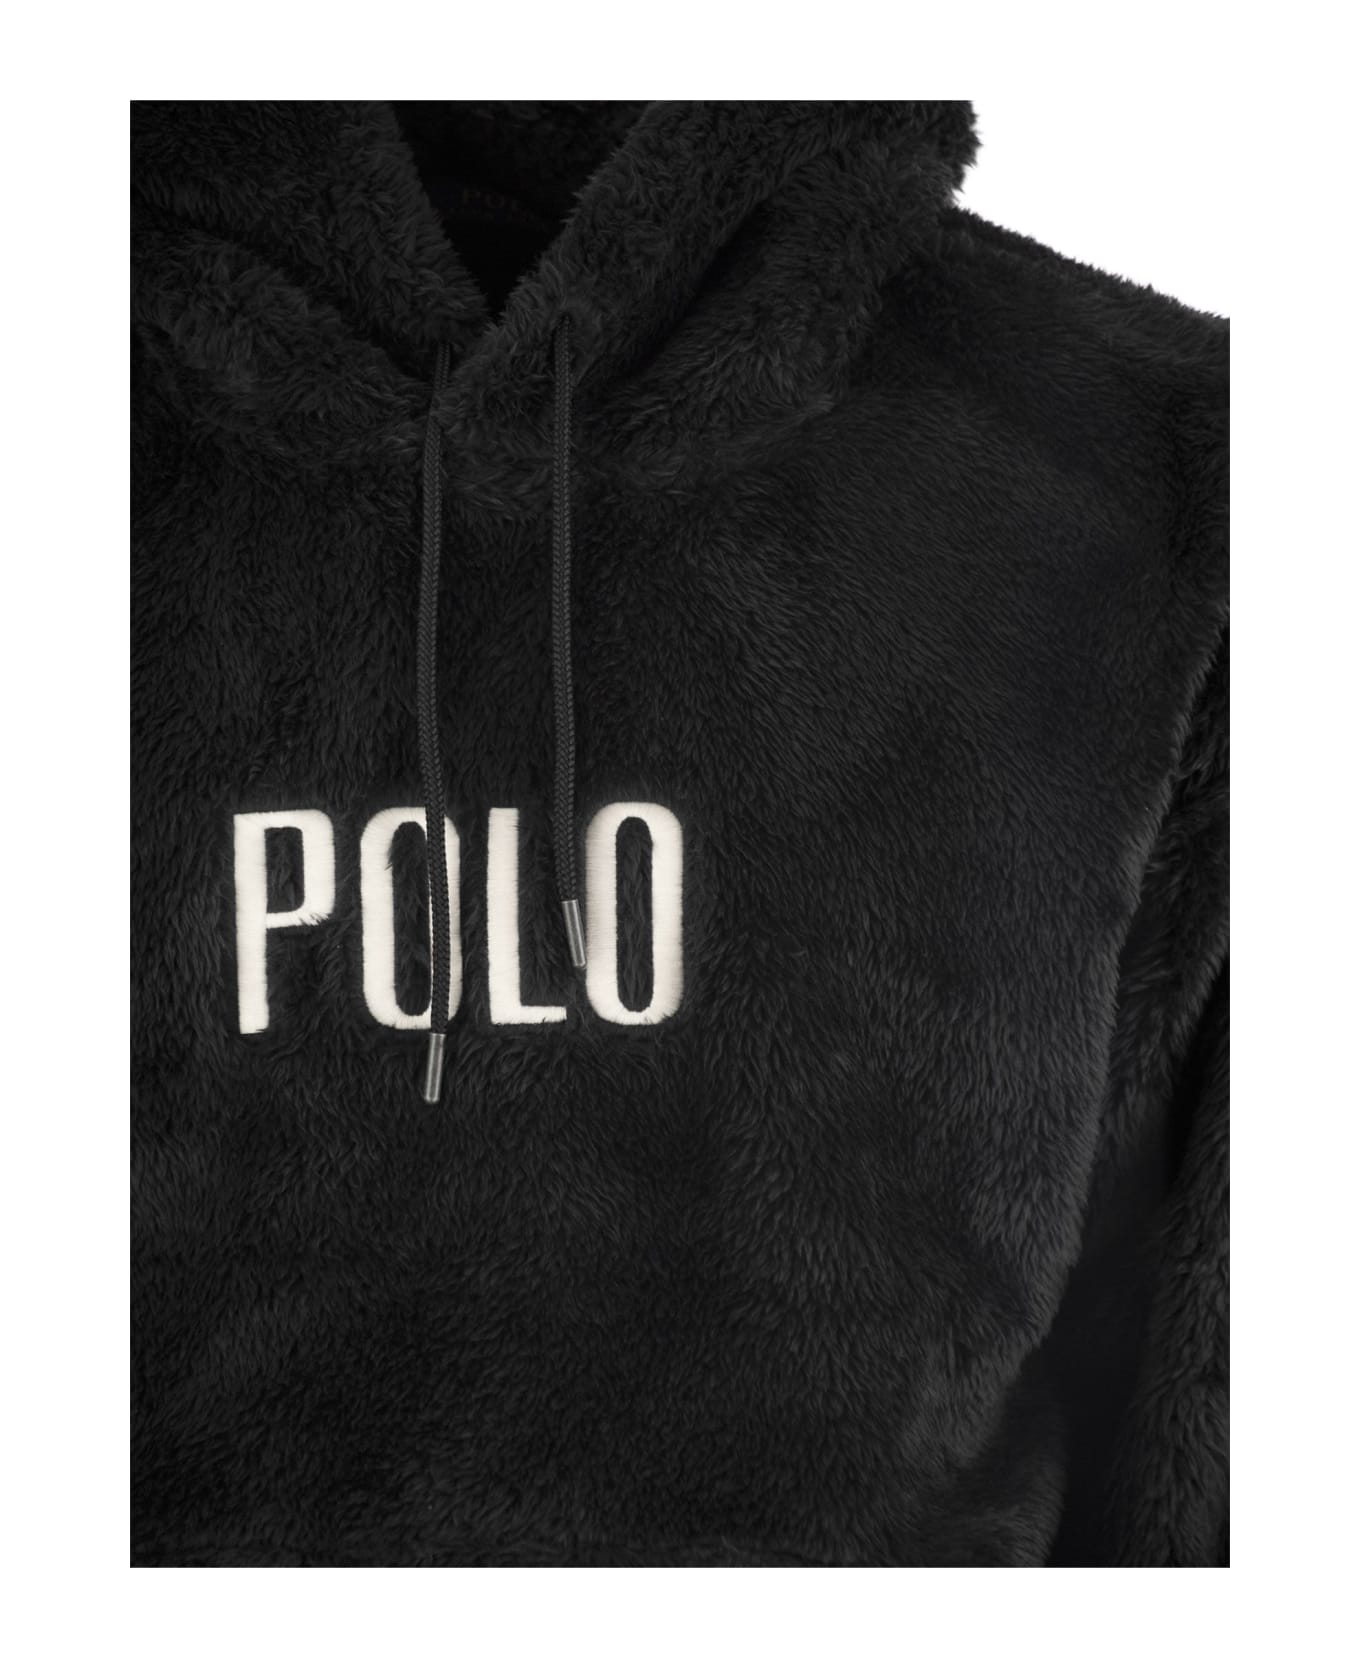 Polo Ralph Lauren Black Fleece Hoodie With Logo - Black ニットウェア